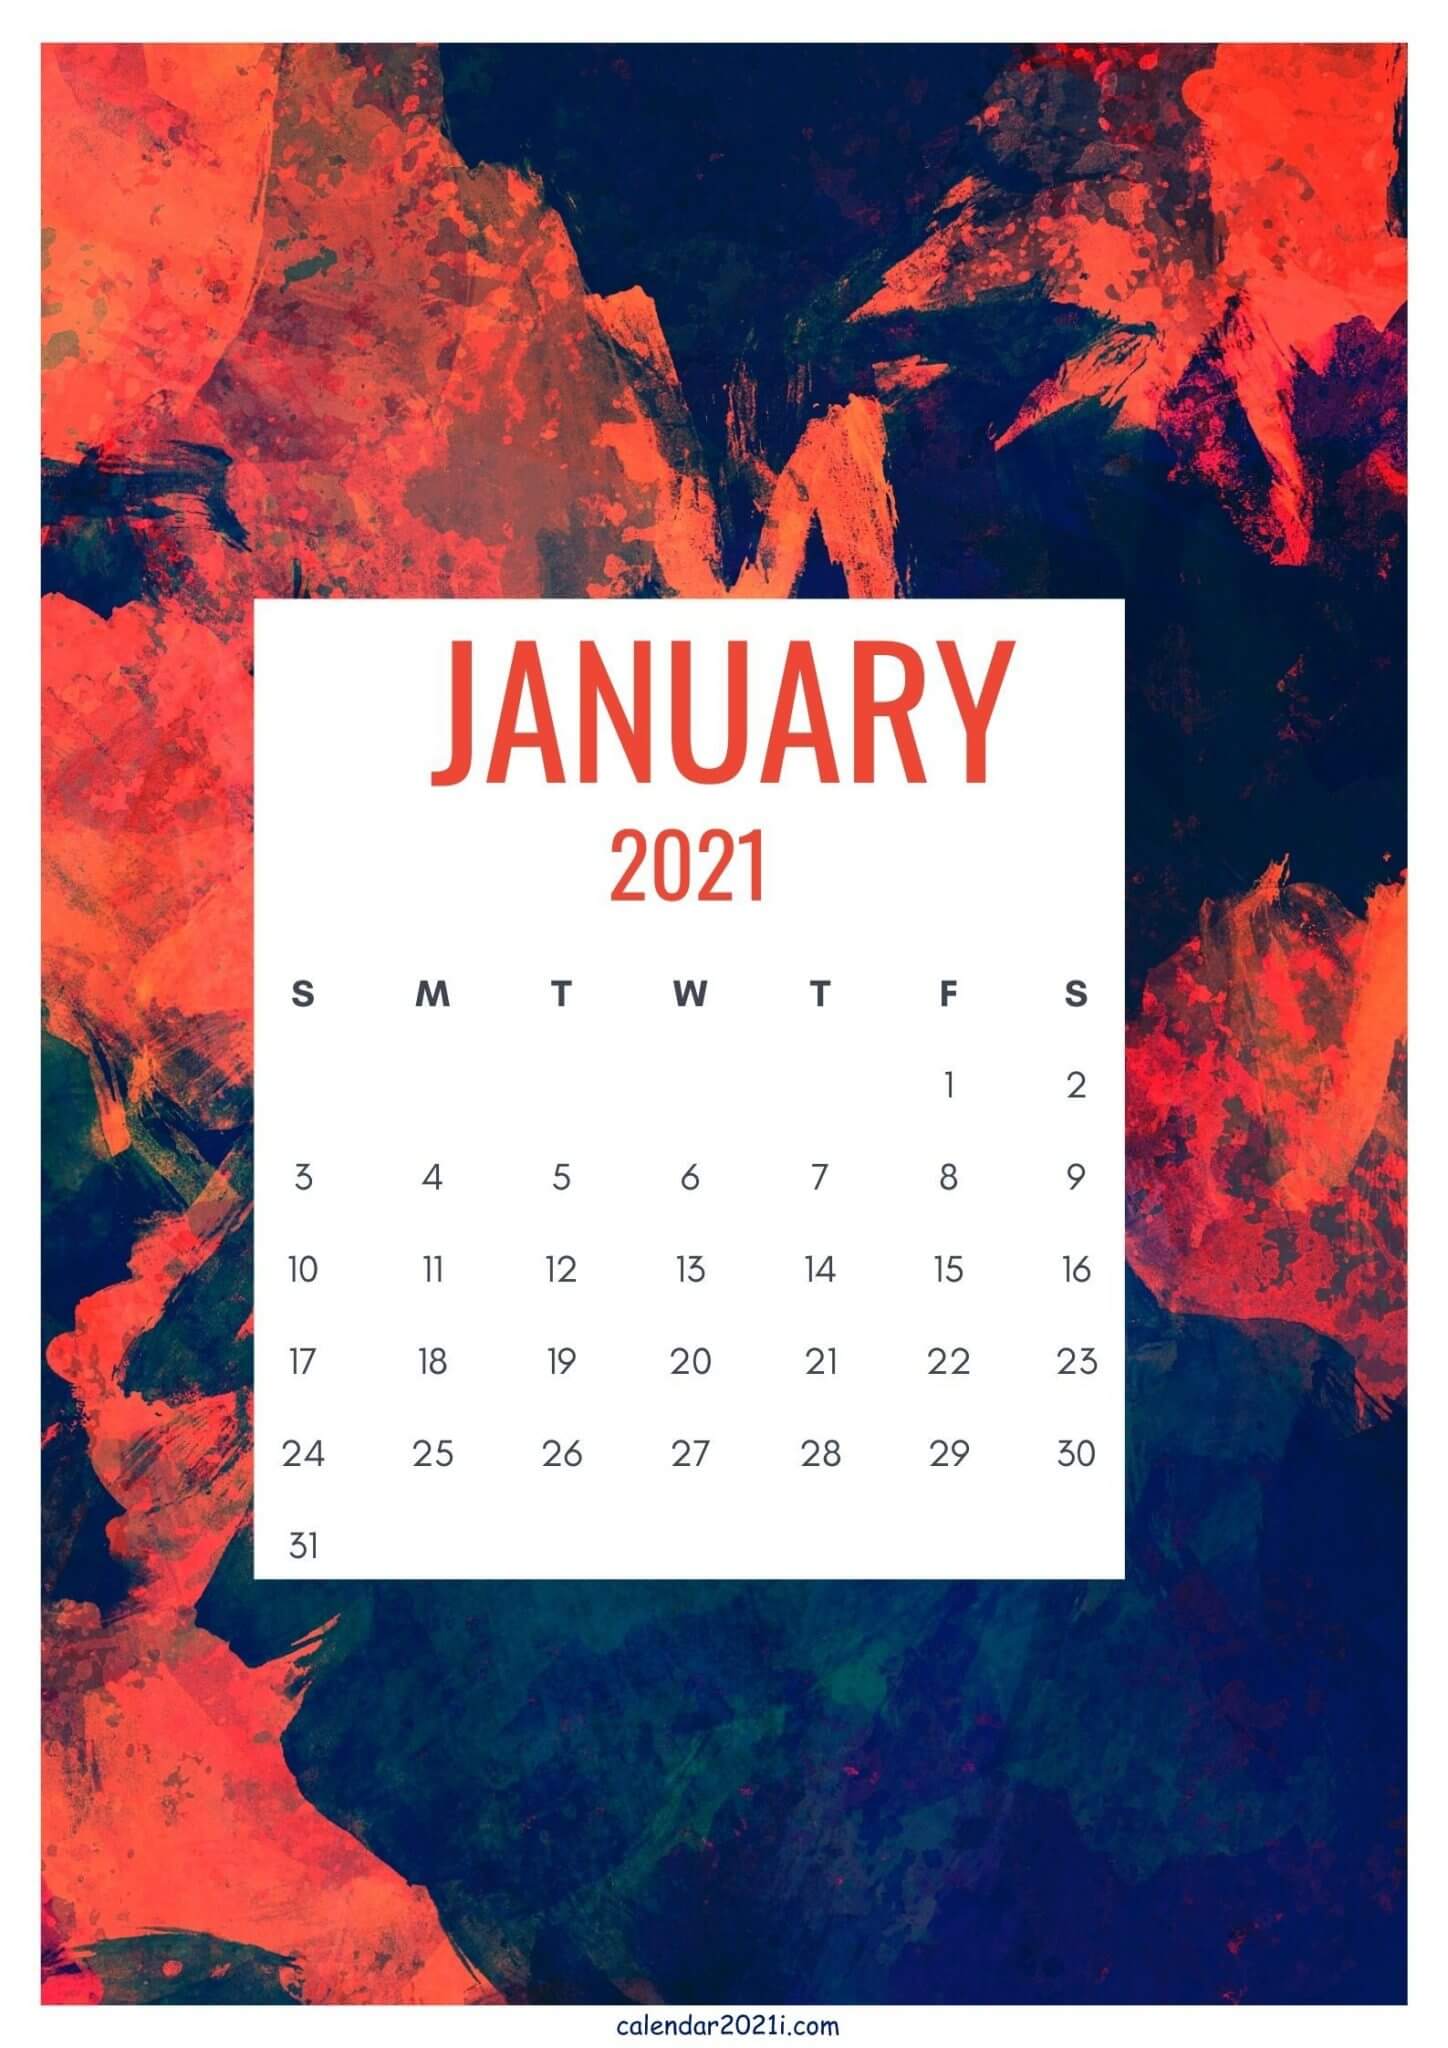 January 2021 Calendar Wallpaper for iPhone